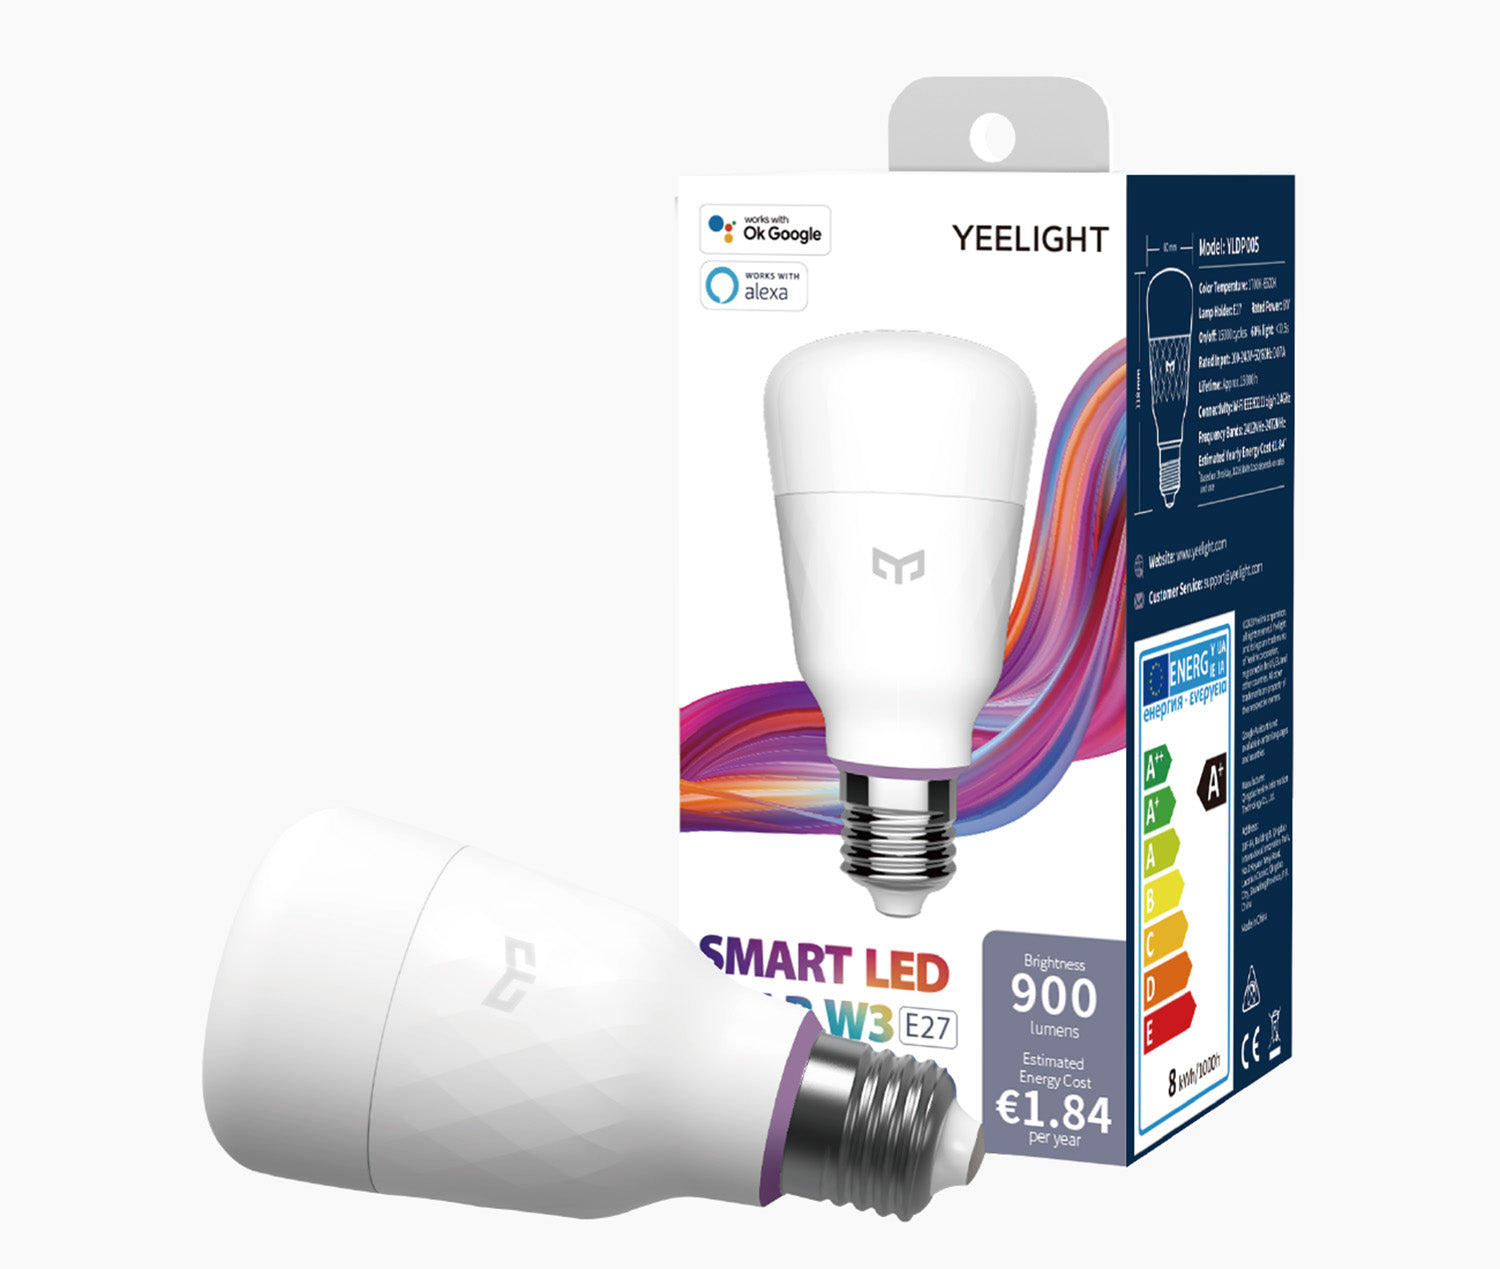 YEELIGHT LED Smart Bulb W3 Mehrfarbig WLAN (E27 Fassung)